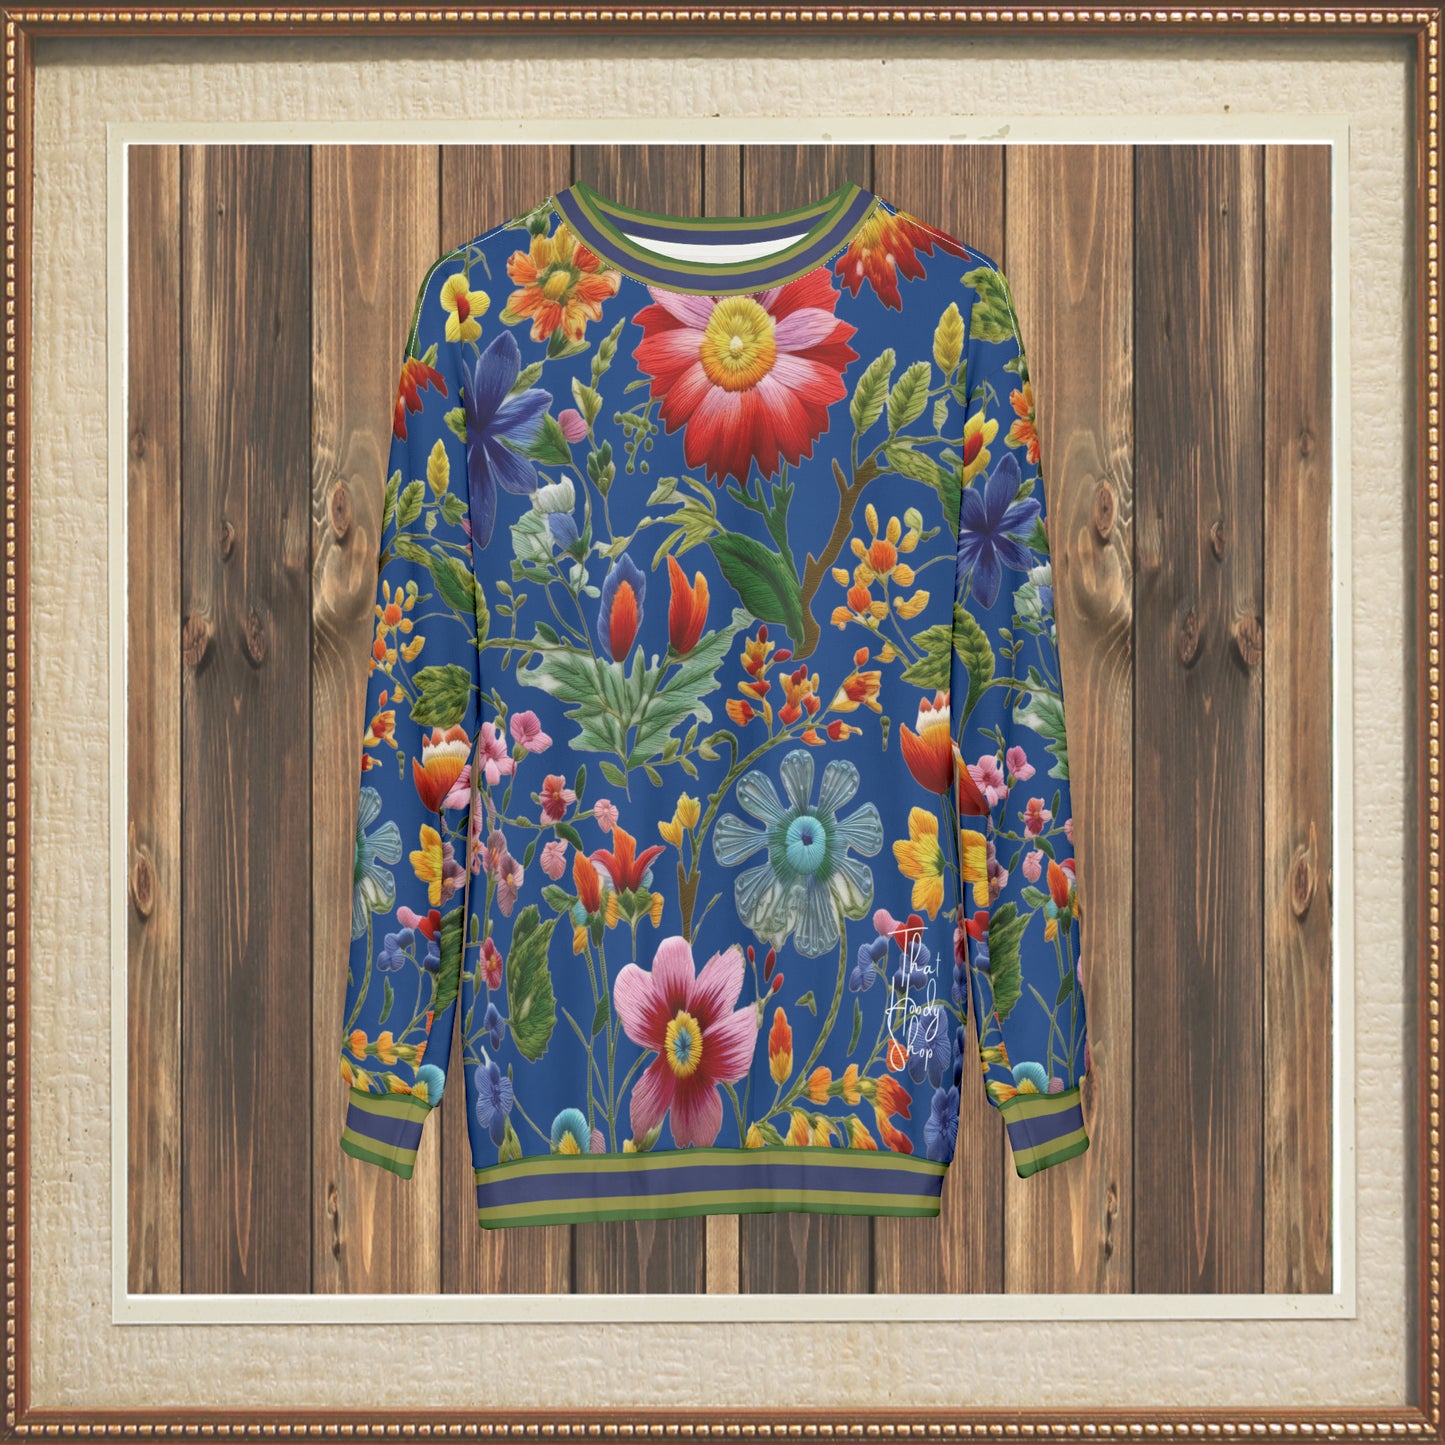 Petunia Blue Floral Print Unisex Sweatshirt